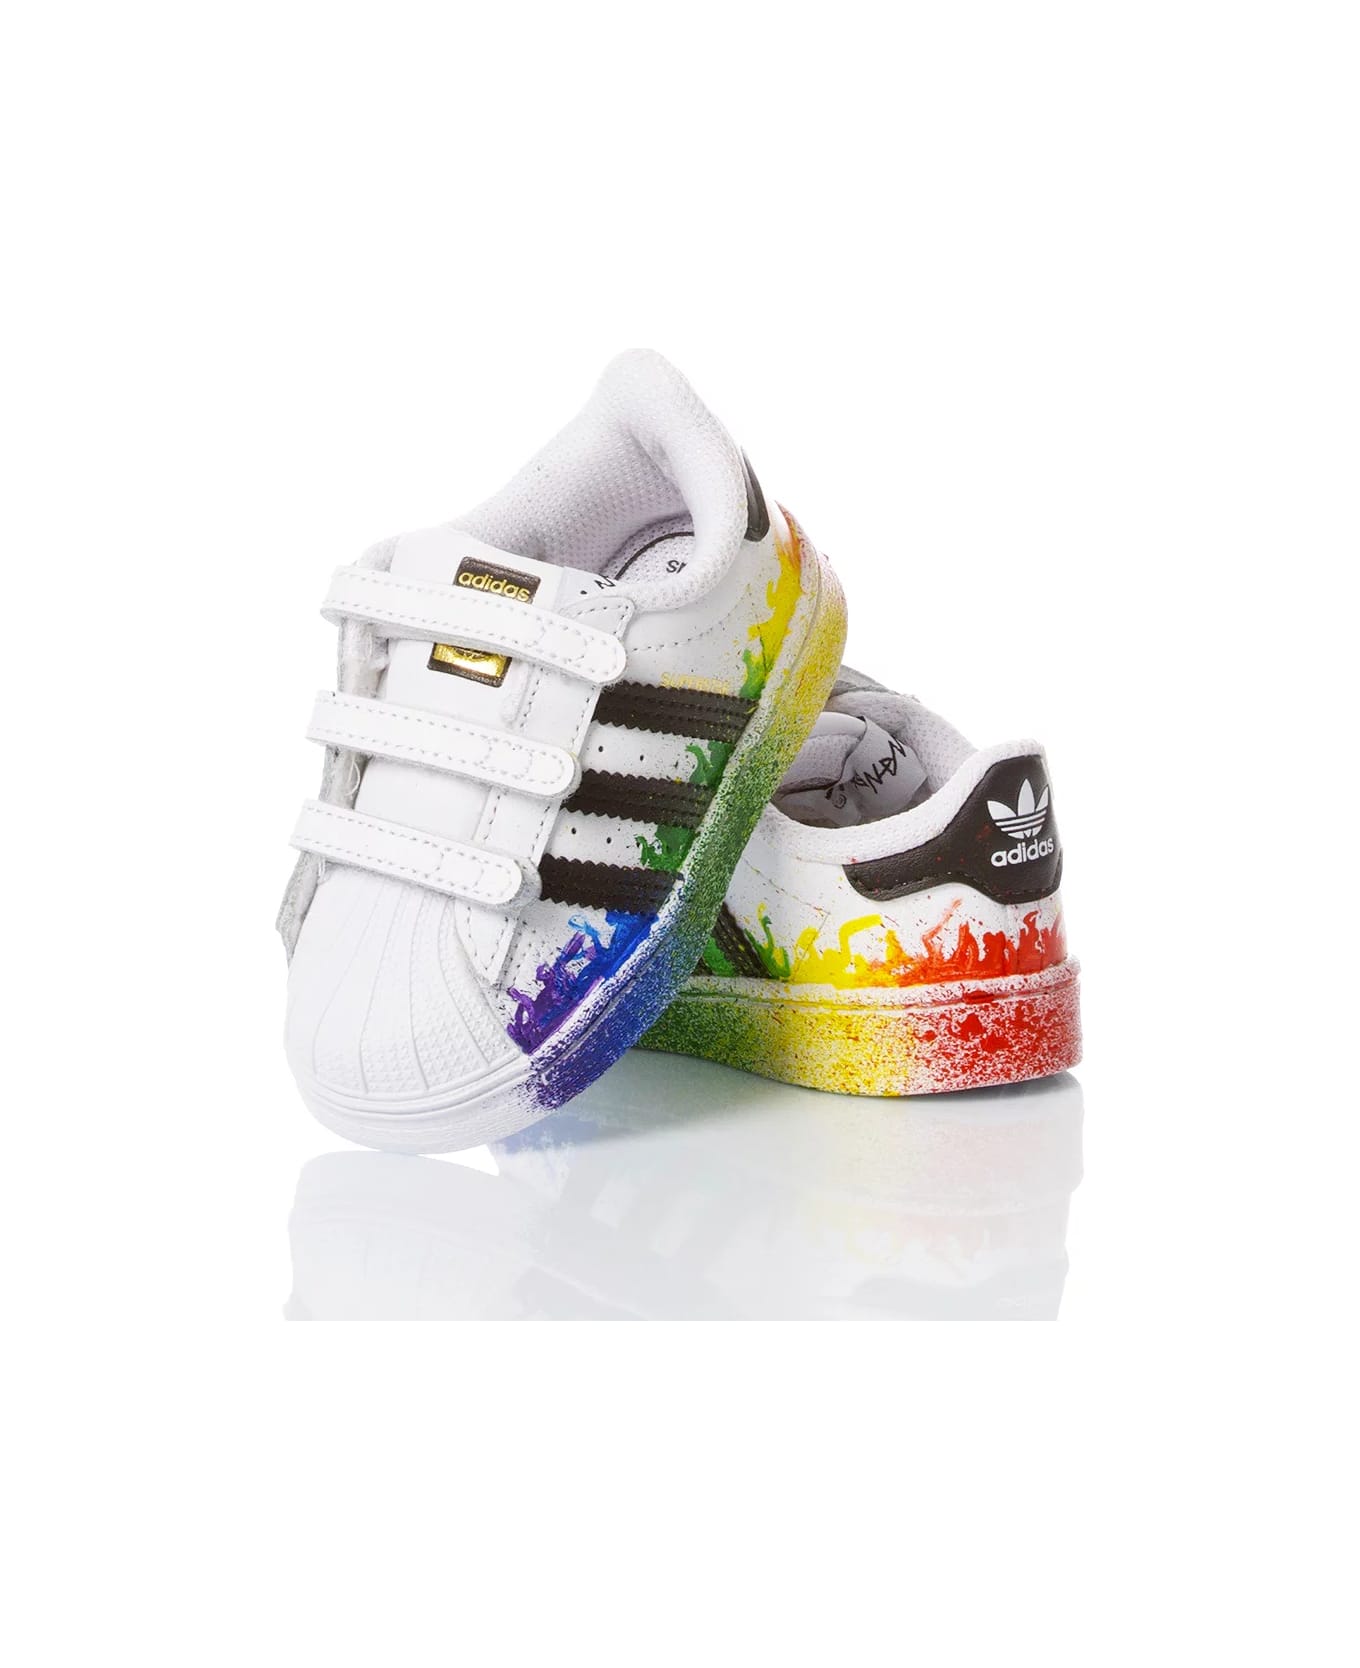 Mimanera Adidas Baby: Customize Your Little Shoe! シューズ